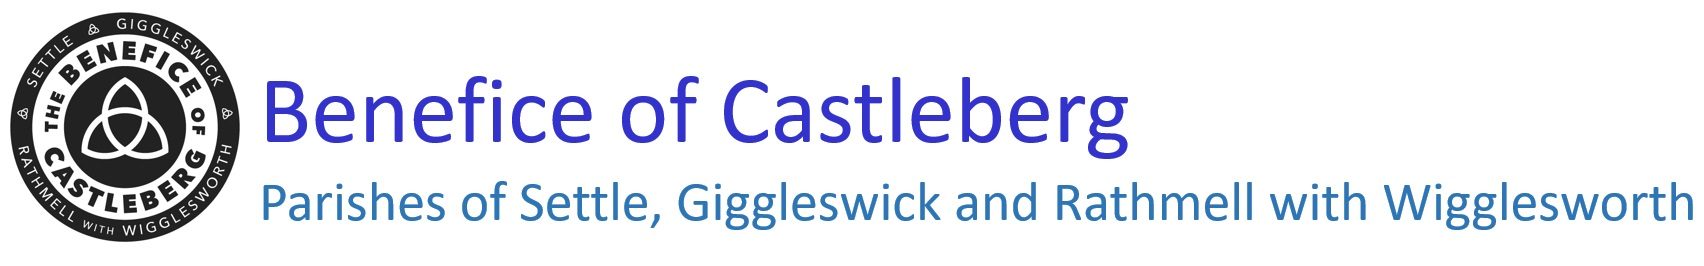 Benefice of Castleberg 